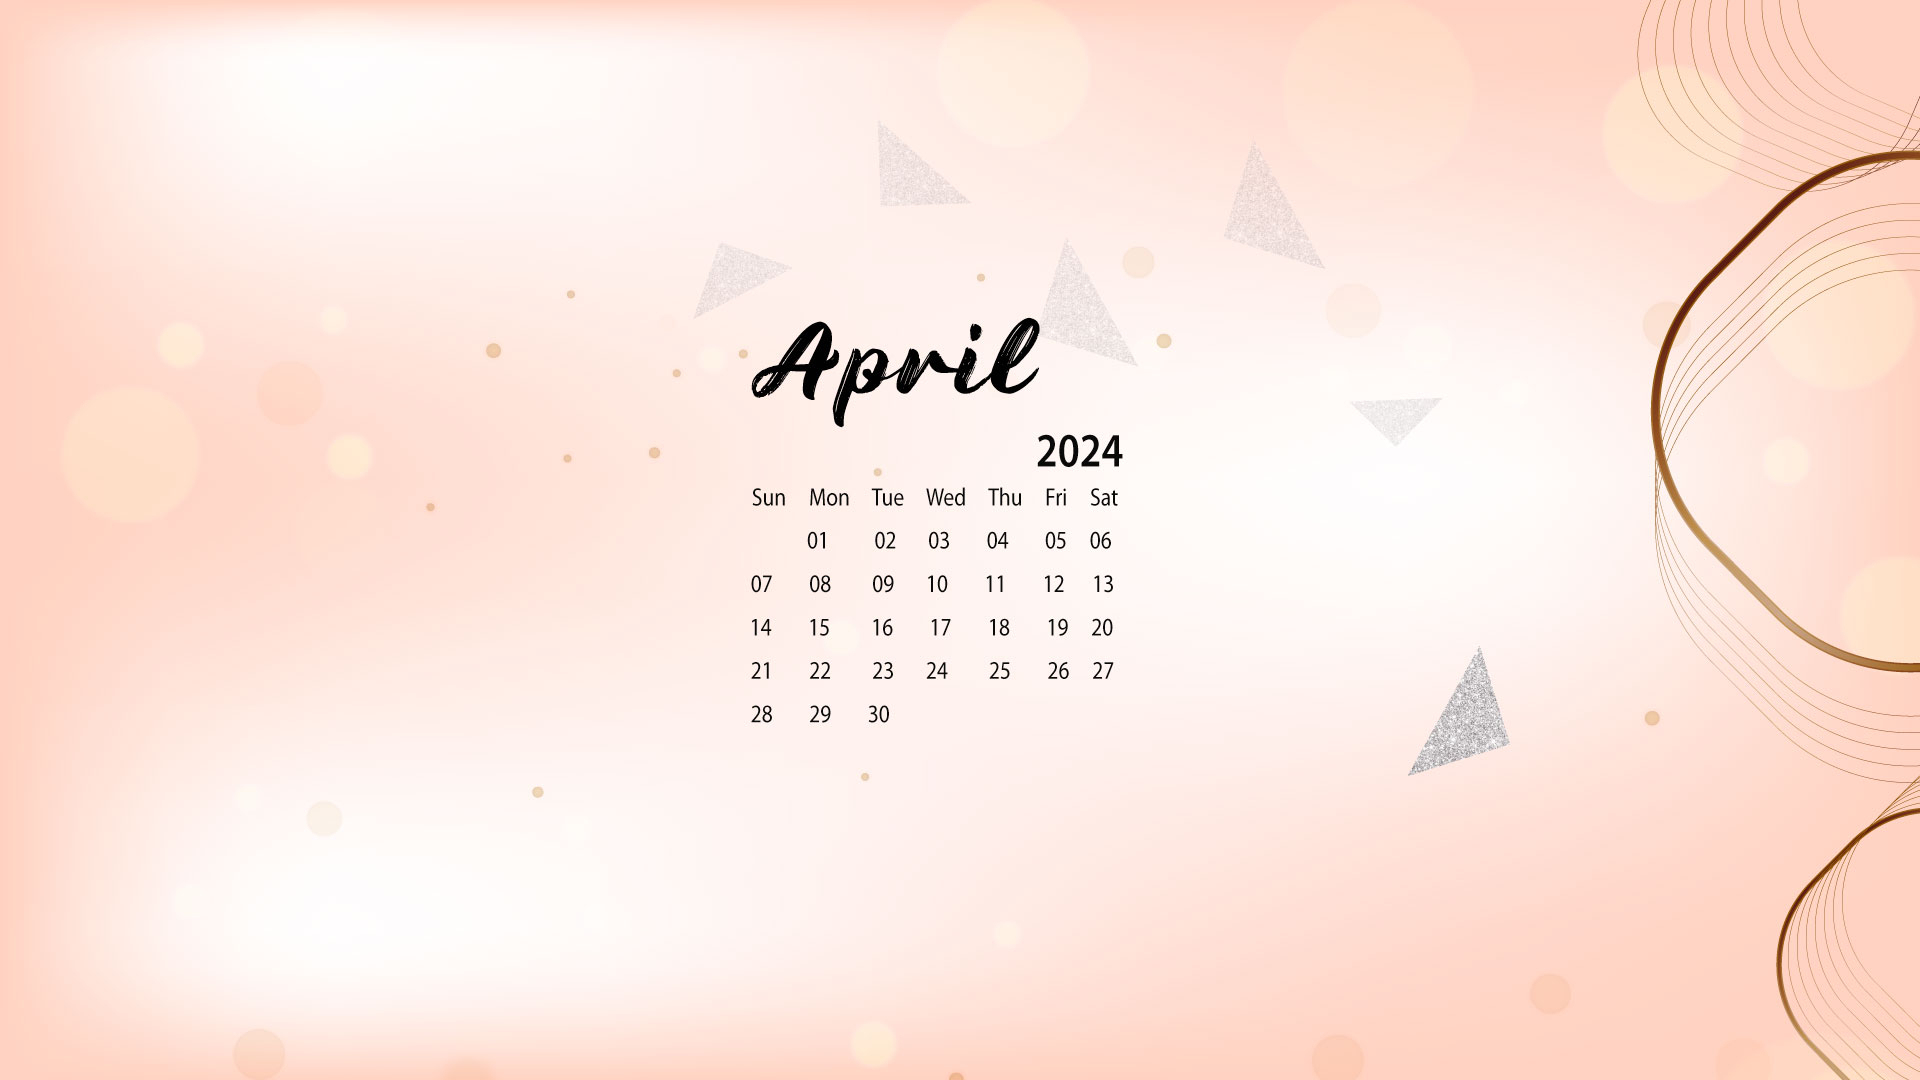 April 2024 Desktop Wallpaper Calendar - Calendarlabs throughout April 2024 Calendar Wallpaper Desktop